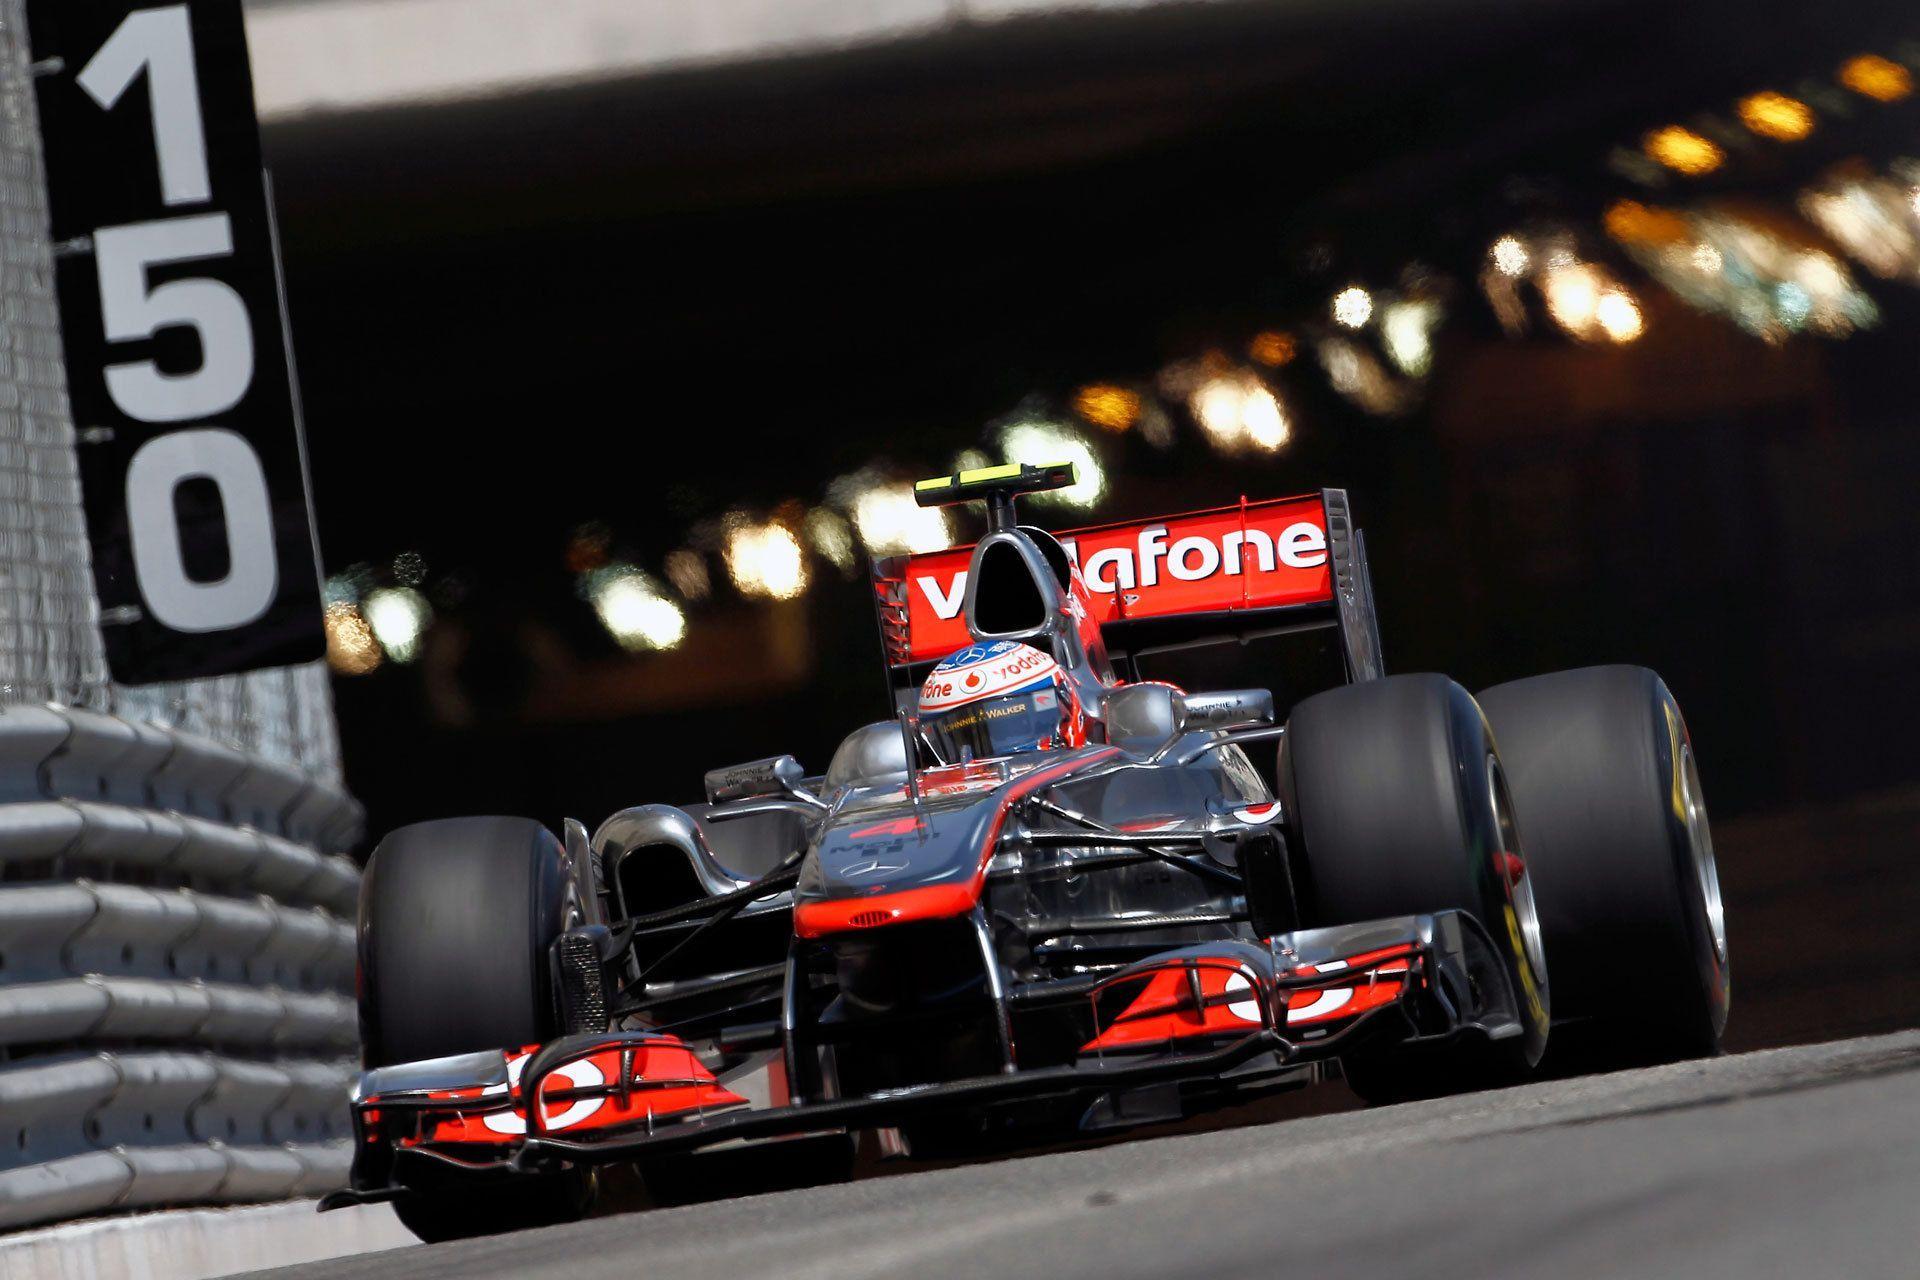 amazing facts about Monaco Grand Prix